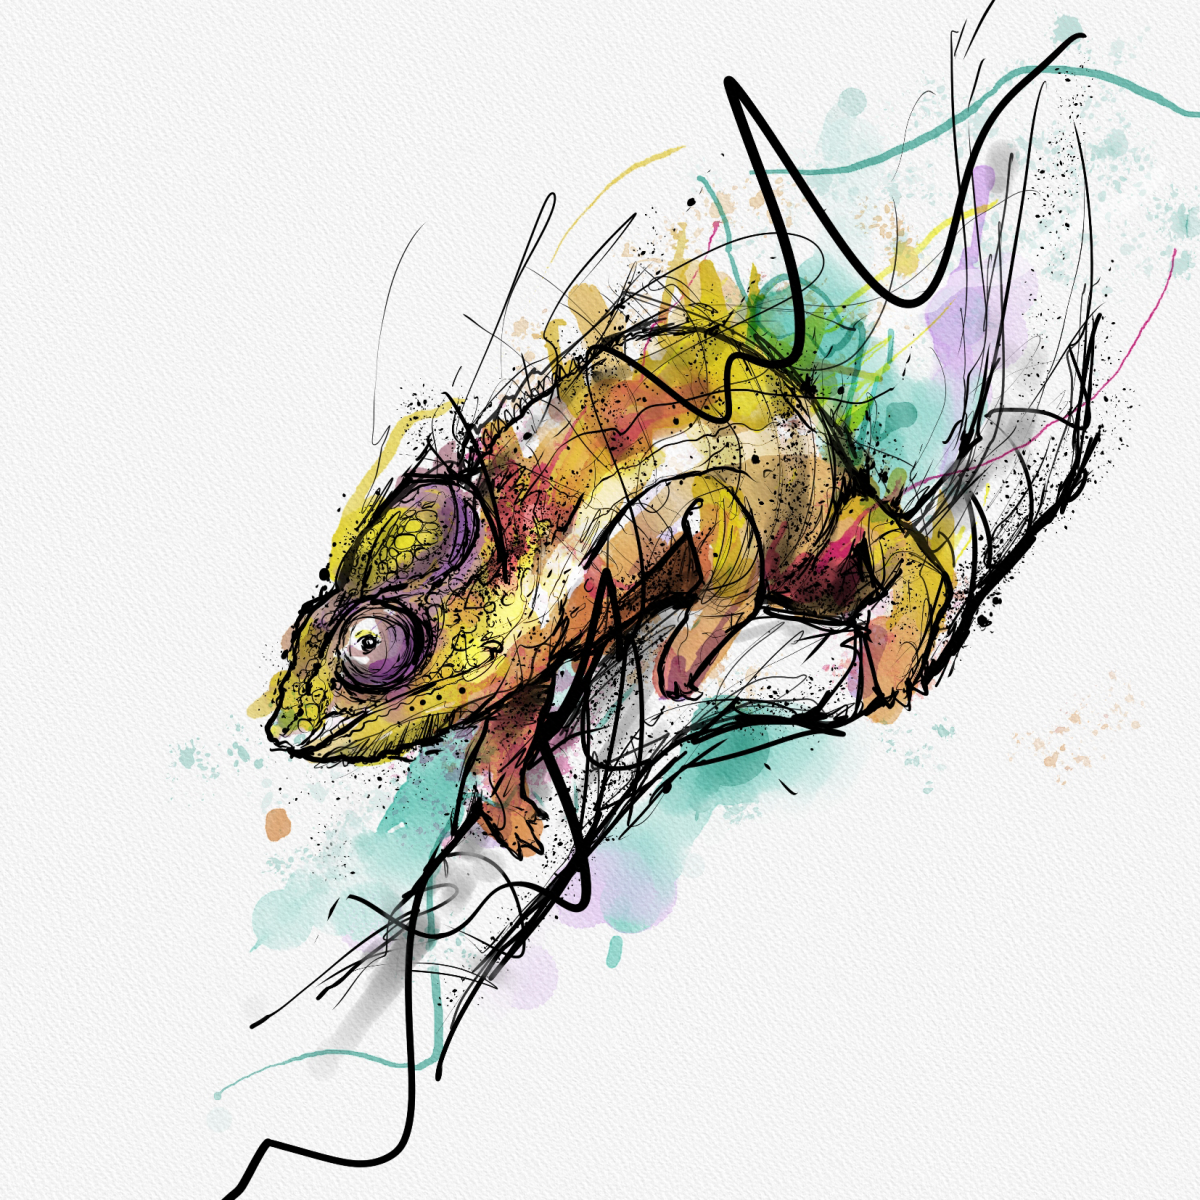 Chameleon by Bryan Sanchez M